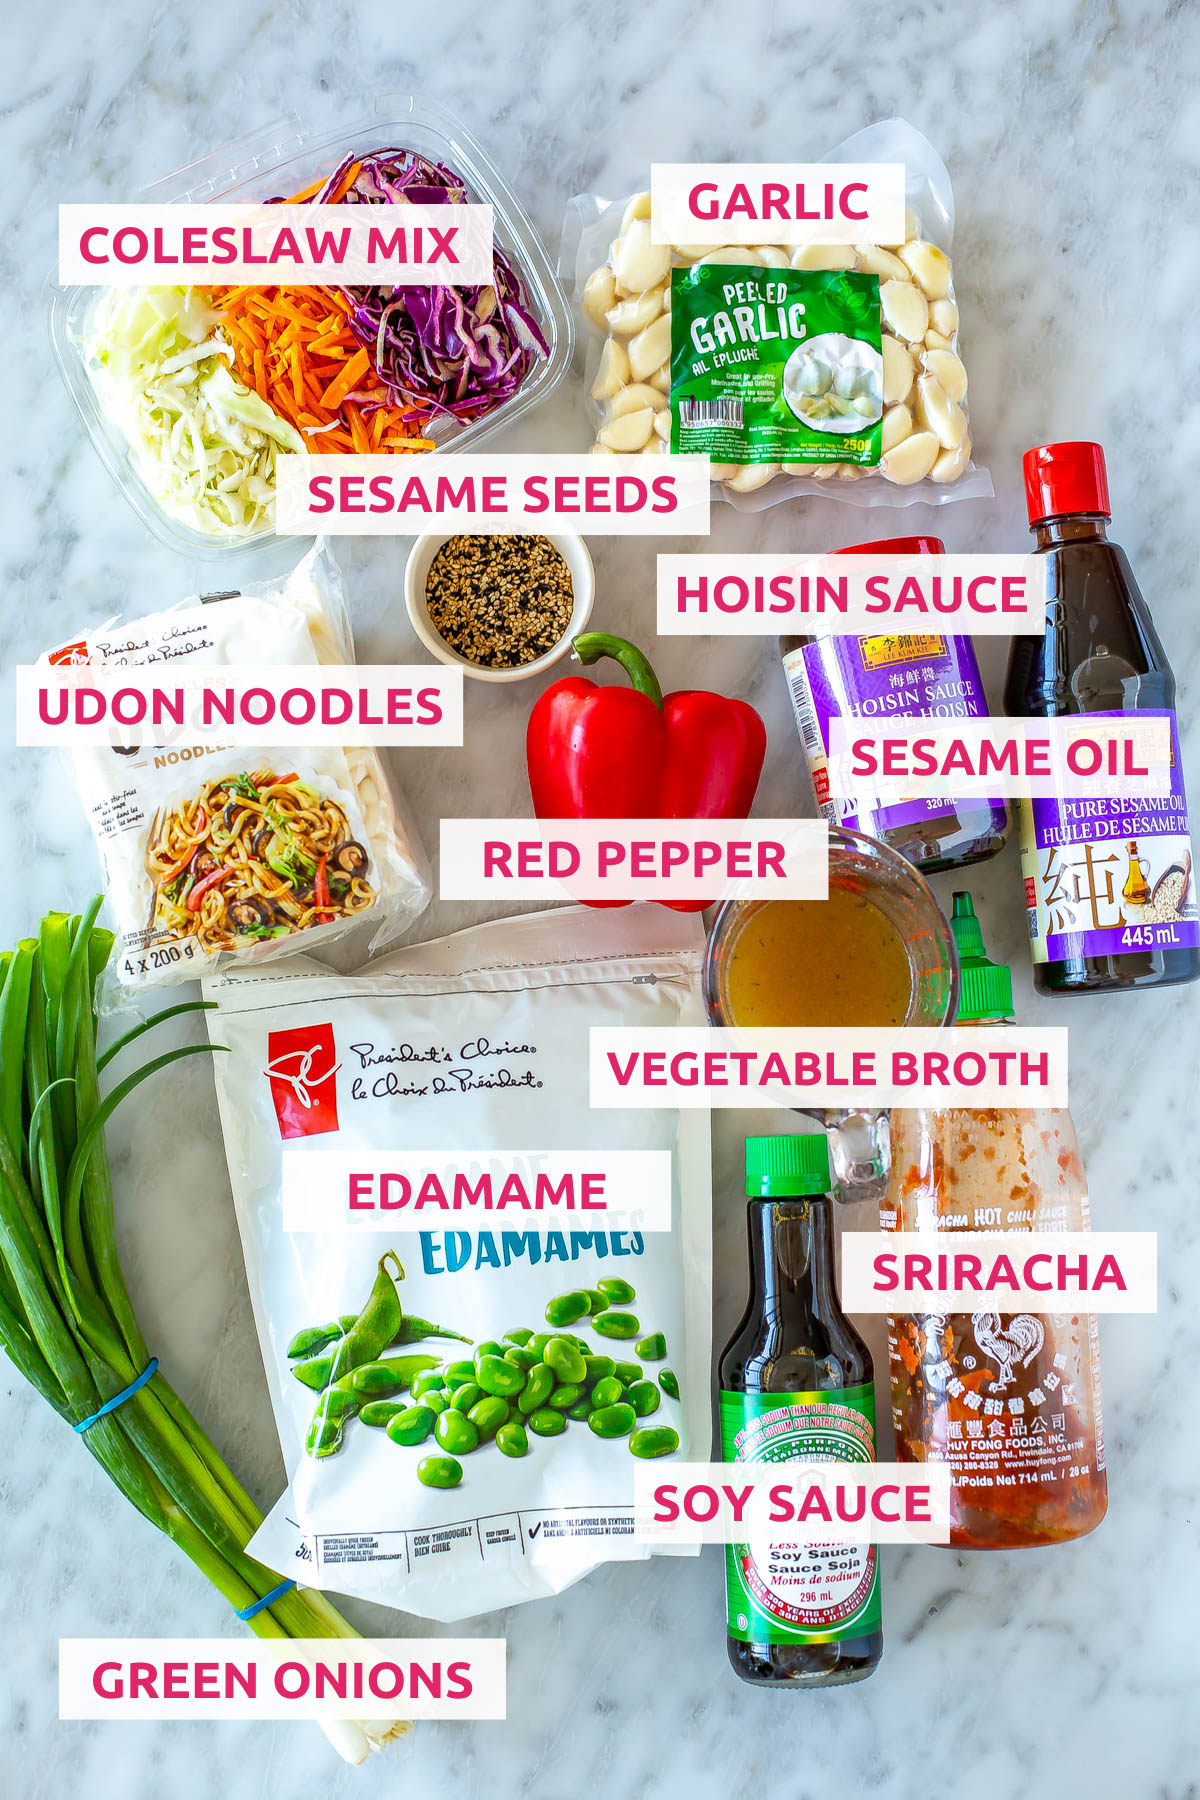 Ingredients for Udon Noodles: udon noodles, coleslaw mix, edamame, garlic, hoisin sauce, soy sauce, sesame oil, sriracha, green onions, vegetable broth, red pepper and sesame seeds.